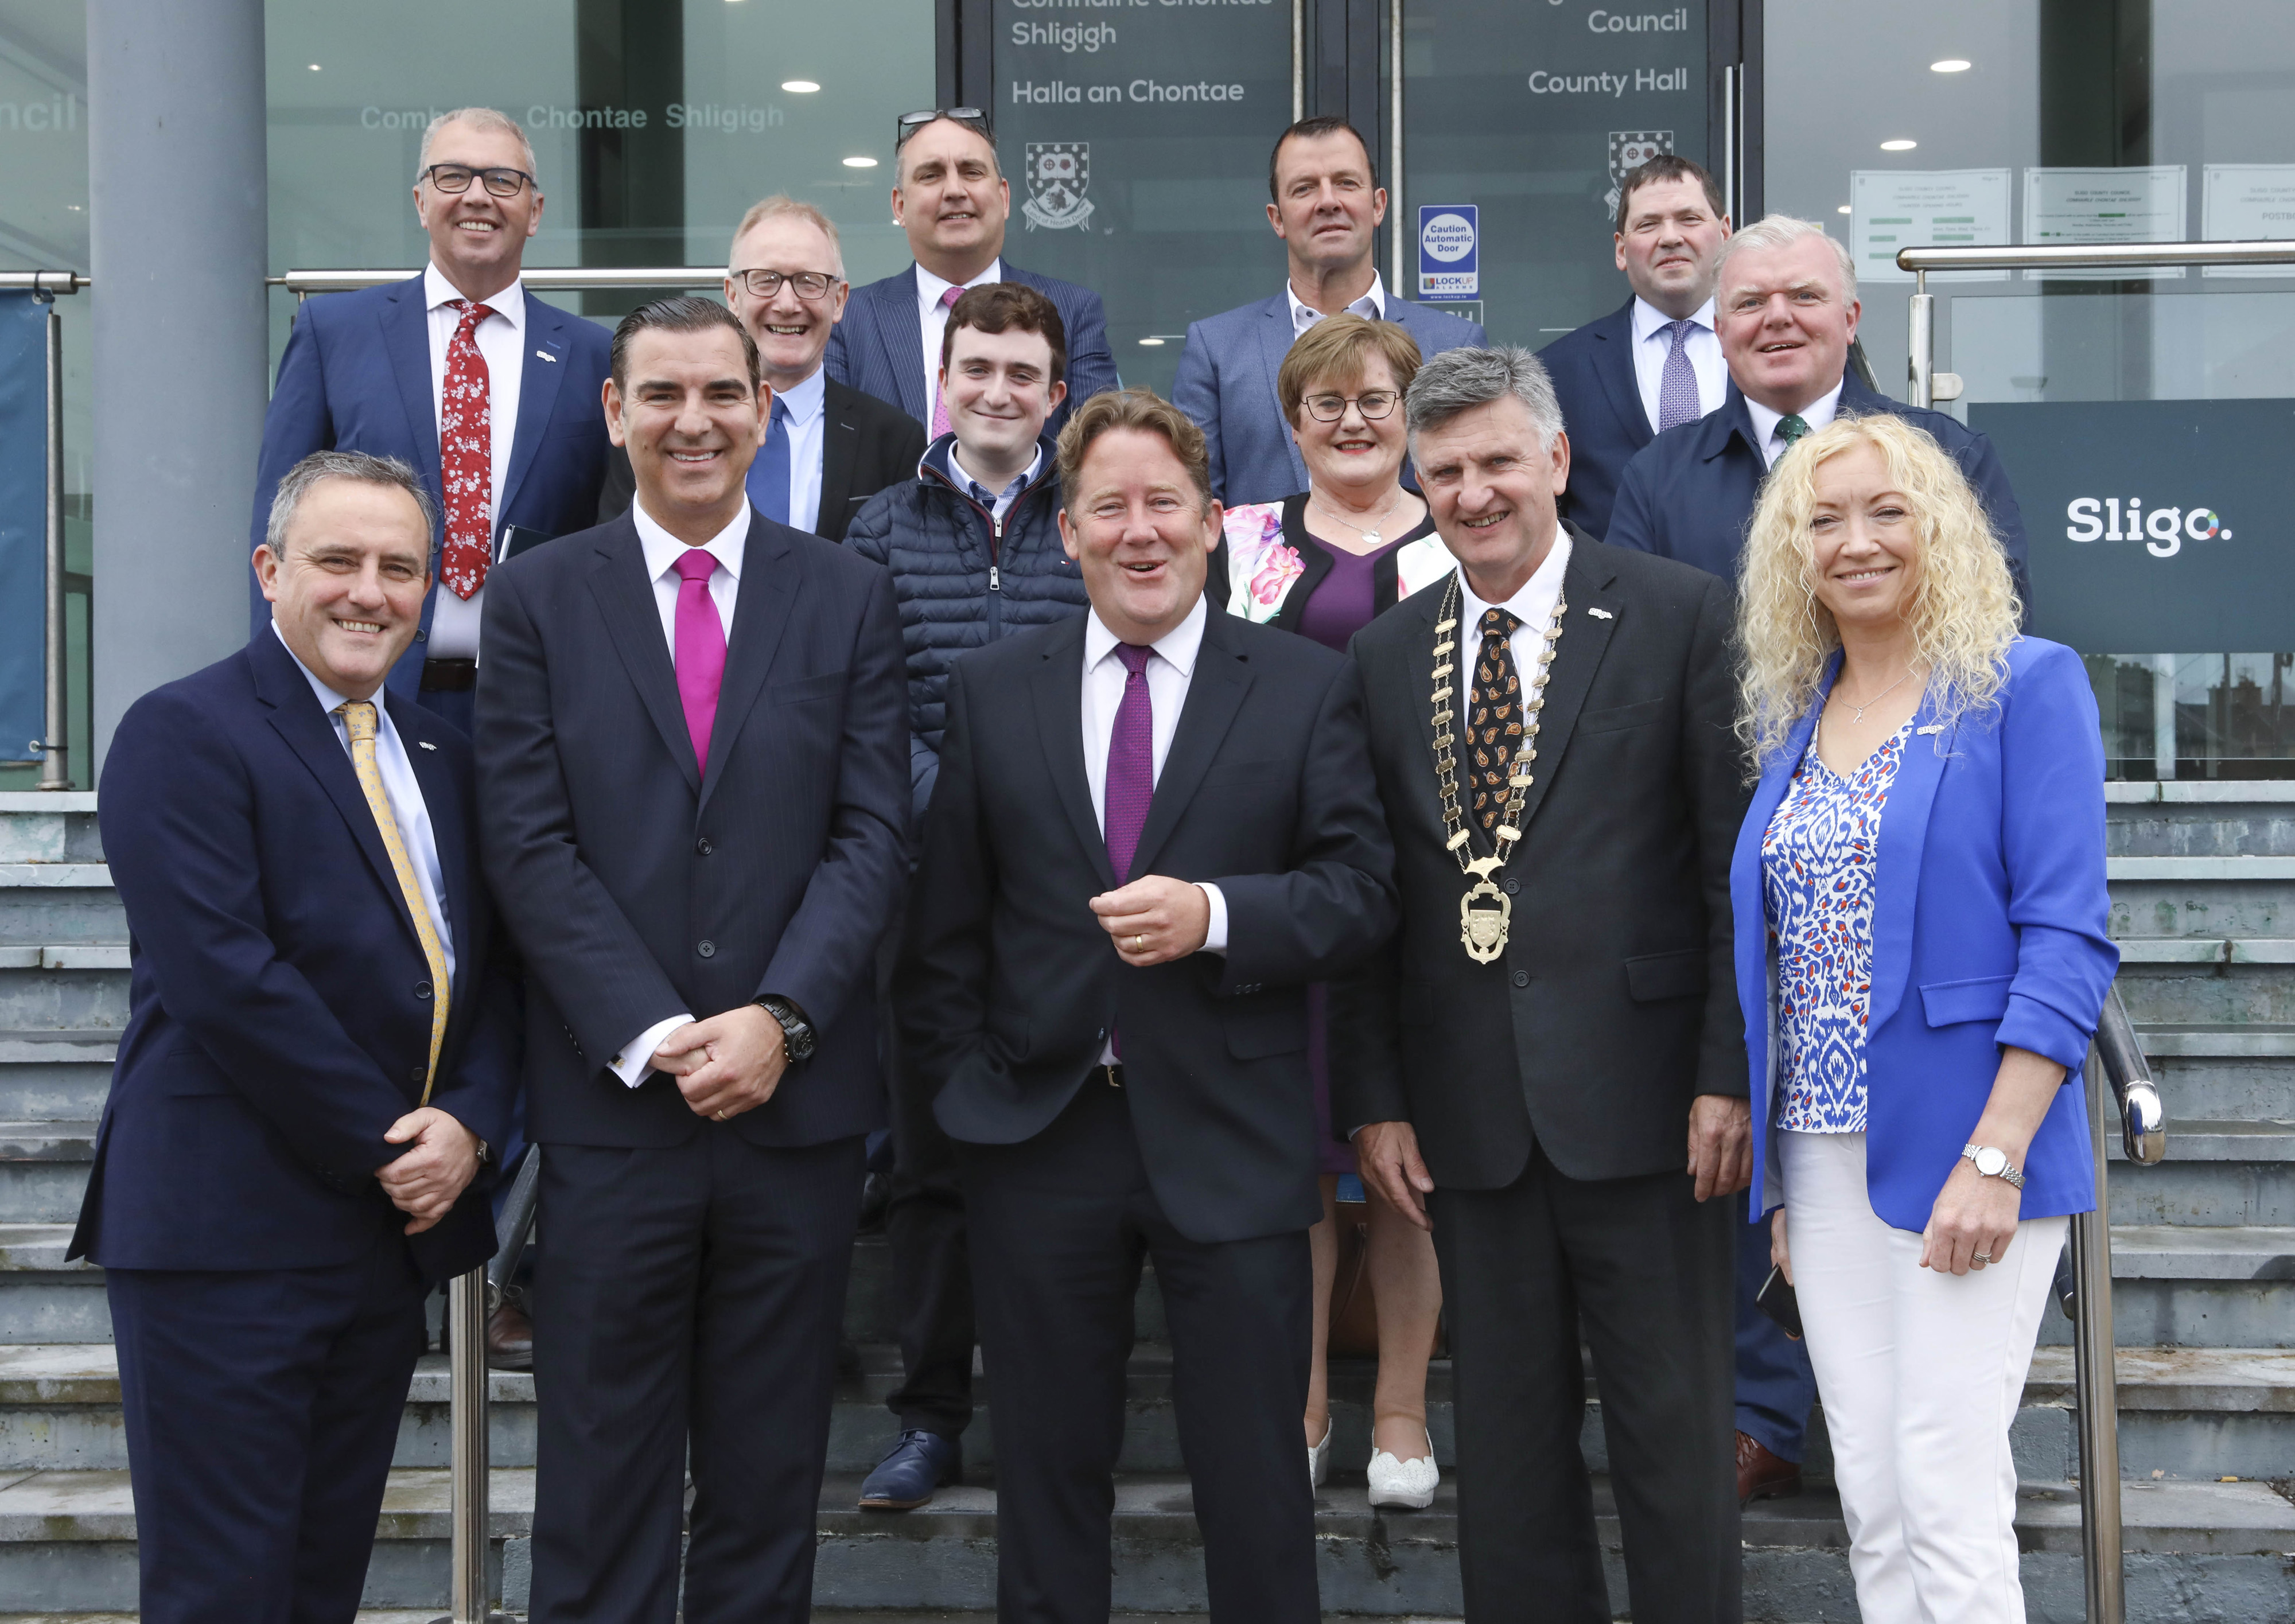 Minister O’Brien briefed on Sligo Housing Programme